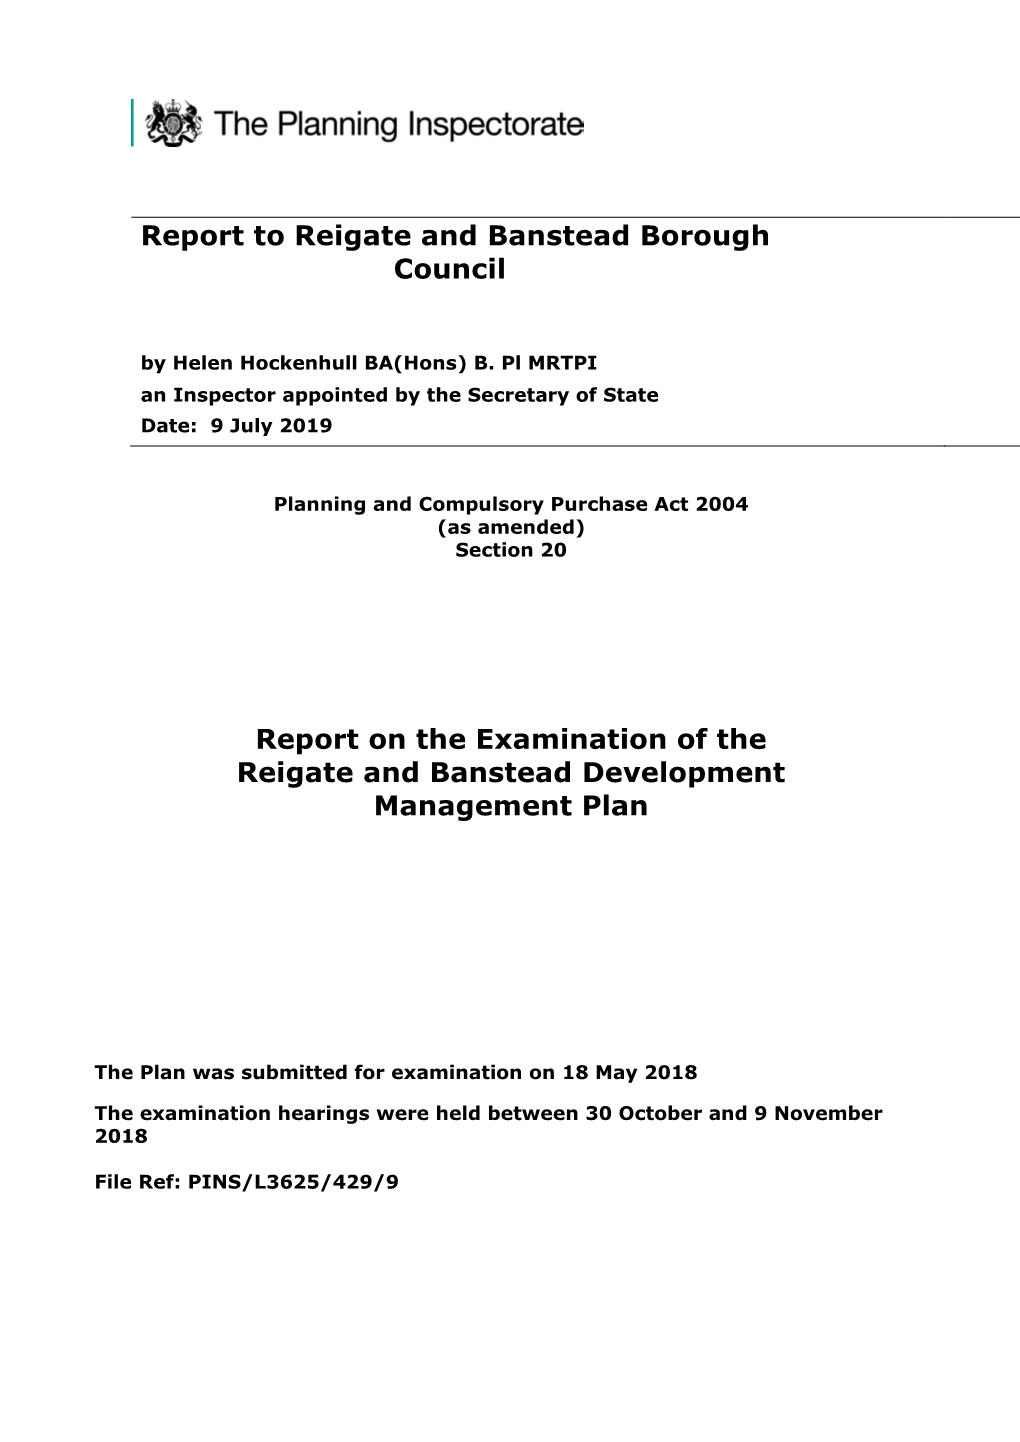 Reigate & Banstead Borough Council Inspector's Report 2019